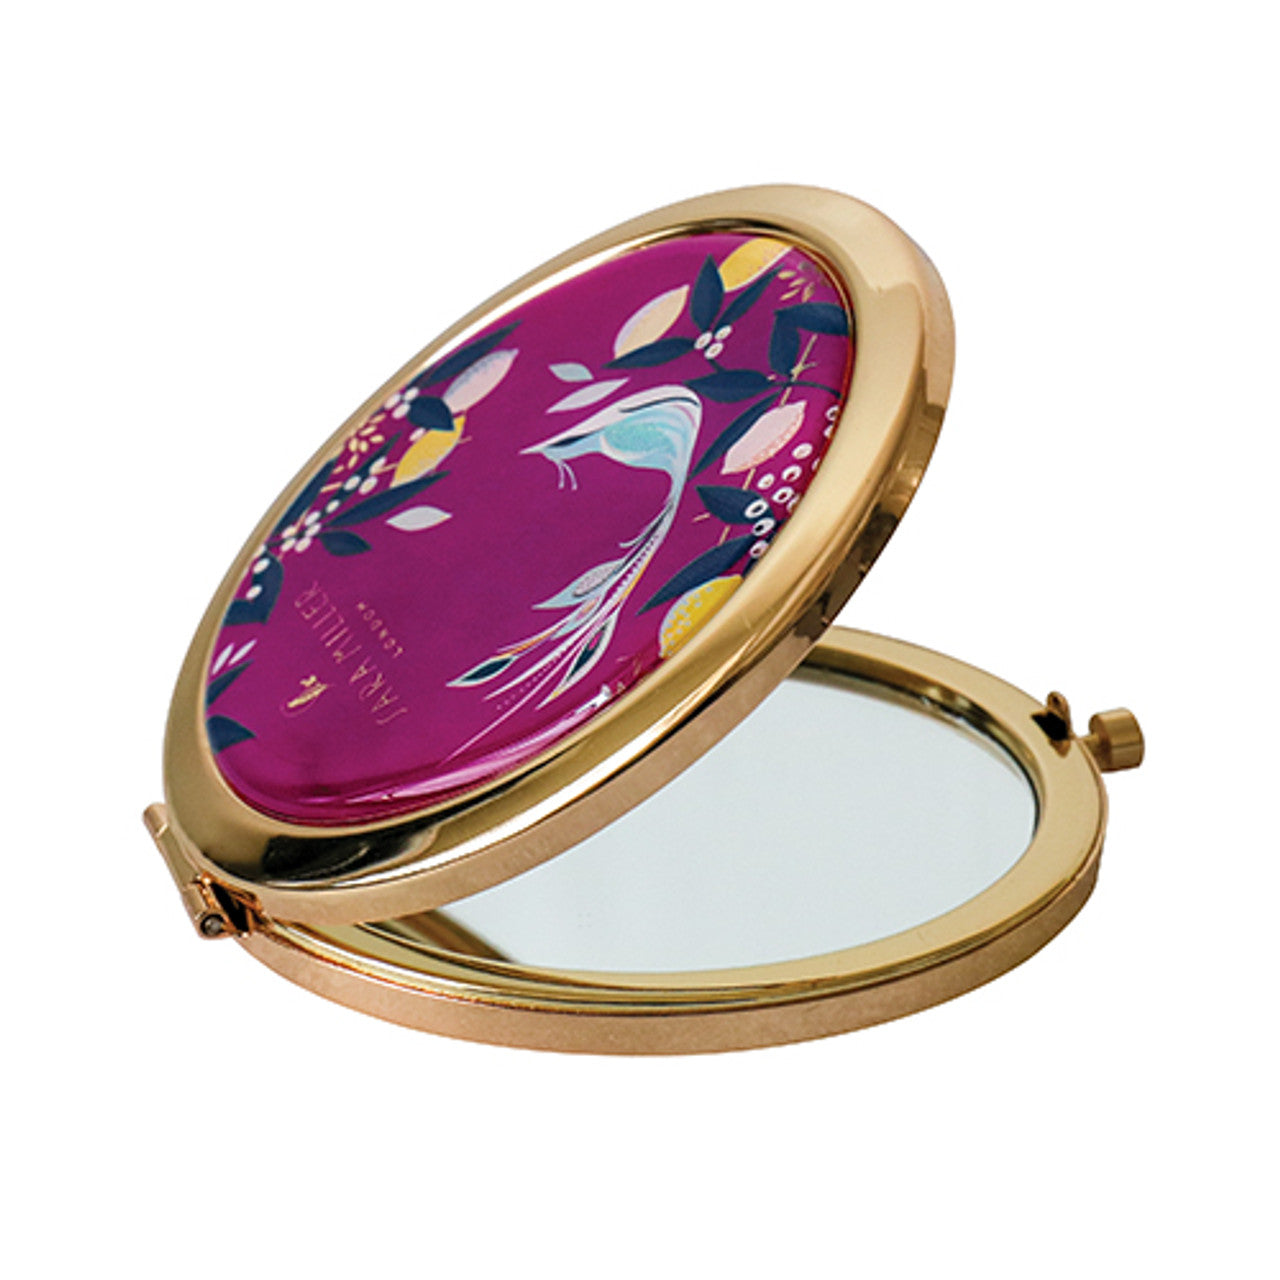 mauve-orchard-compact-mirror